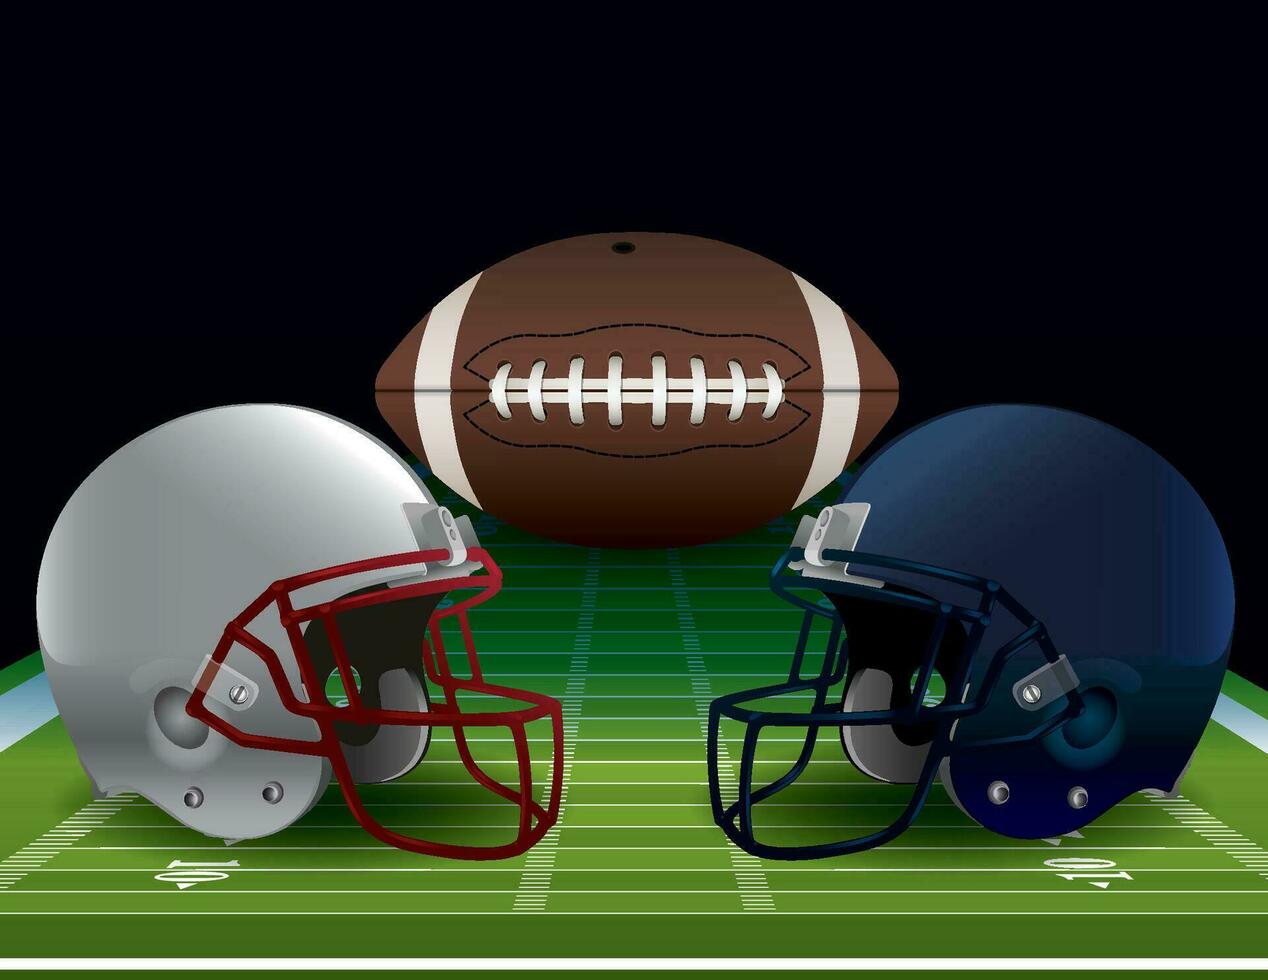 American Football Bowl Game Illustration vector